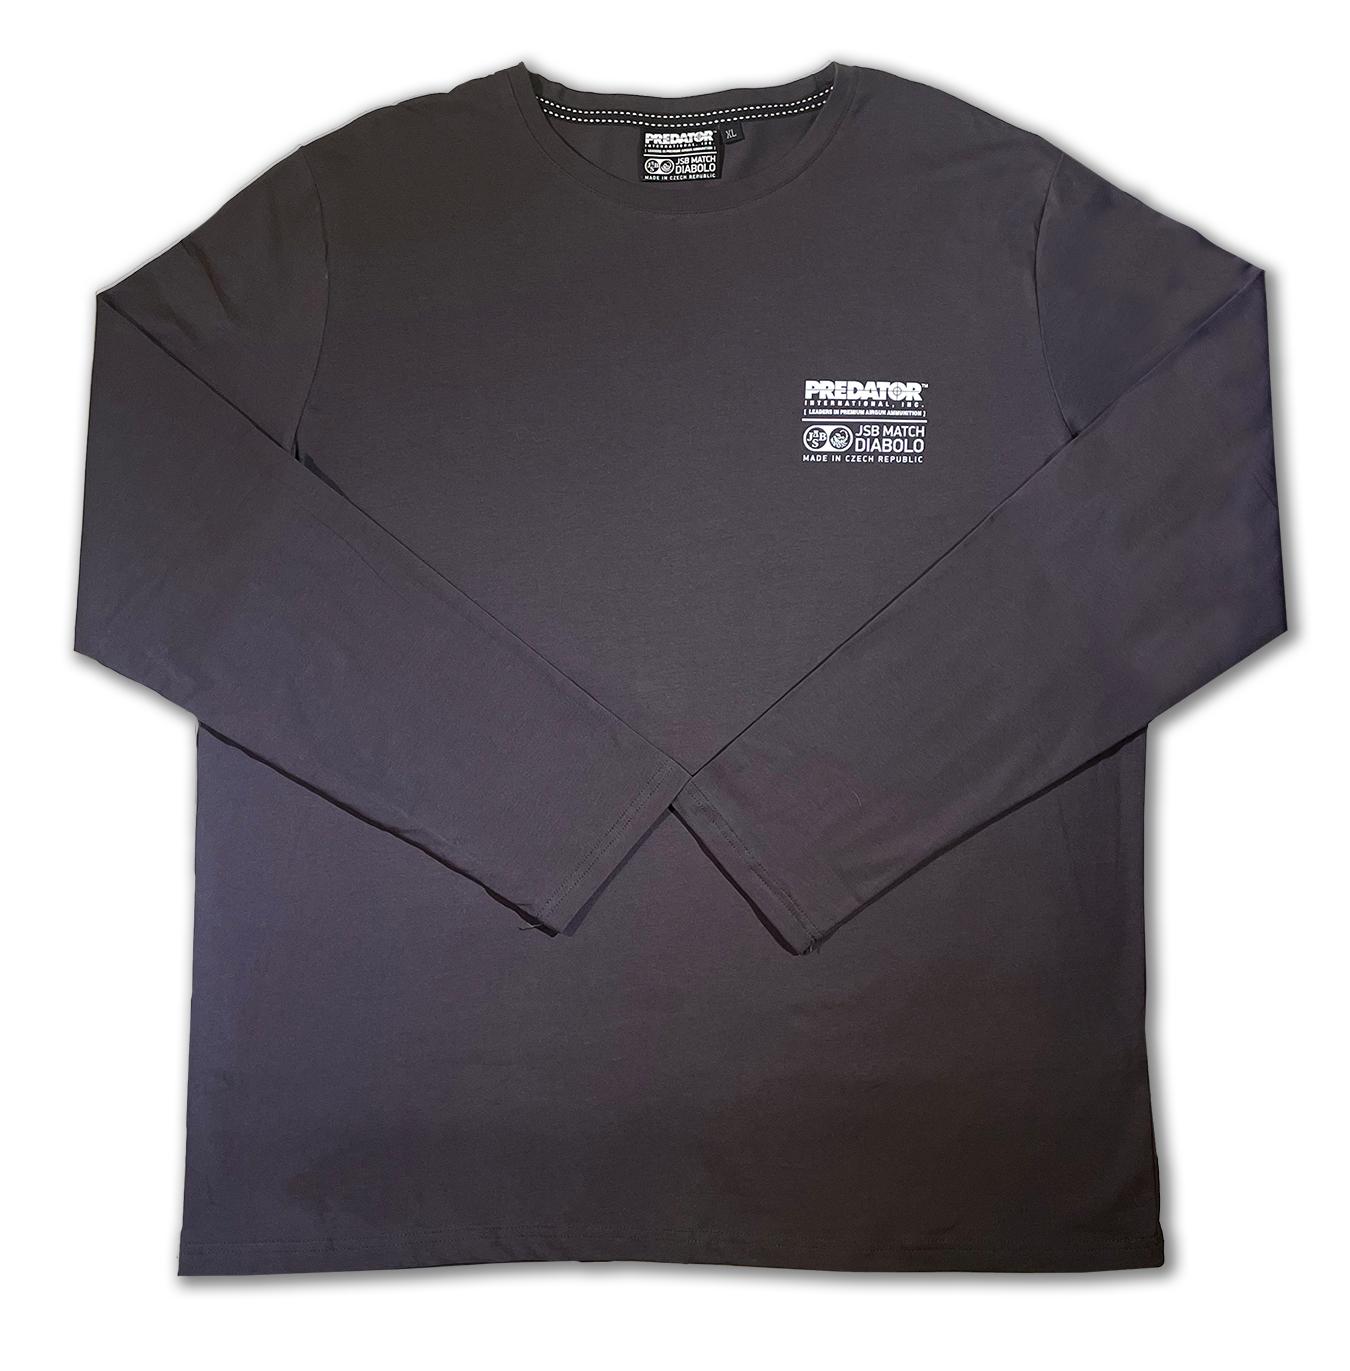 JSB Predator Long Sleeve Cotton/Spandex T-Shirt, Grey, Extra Large